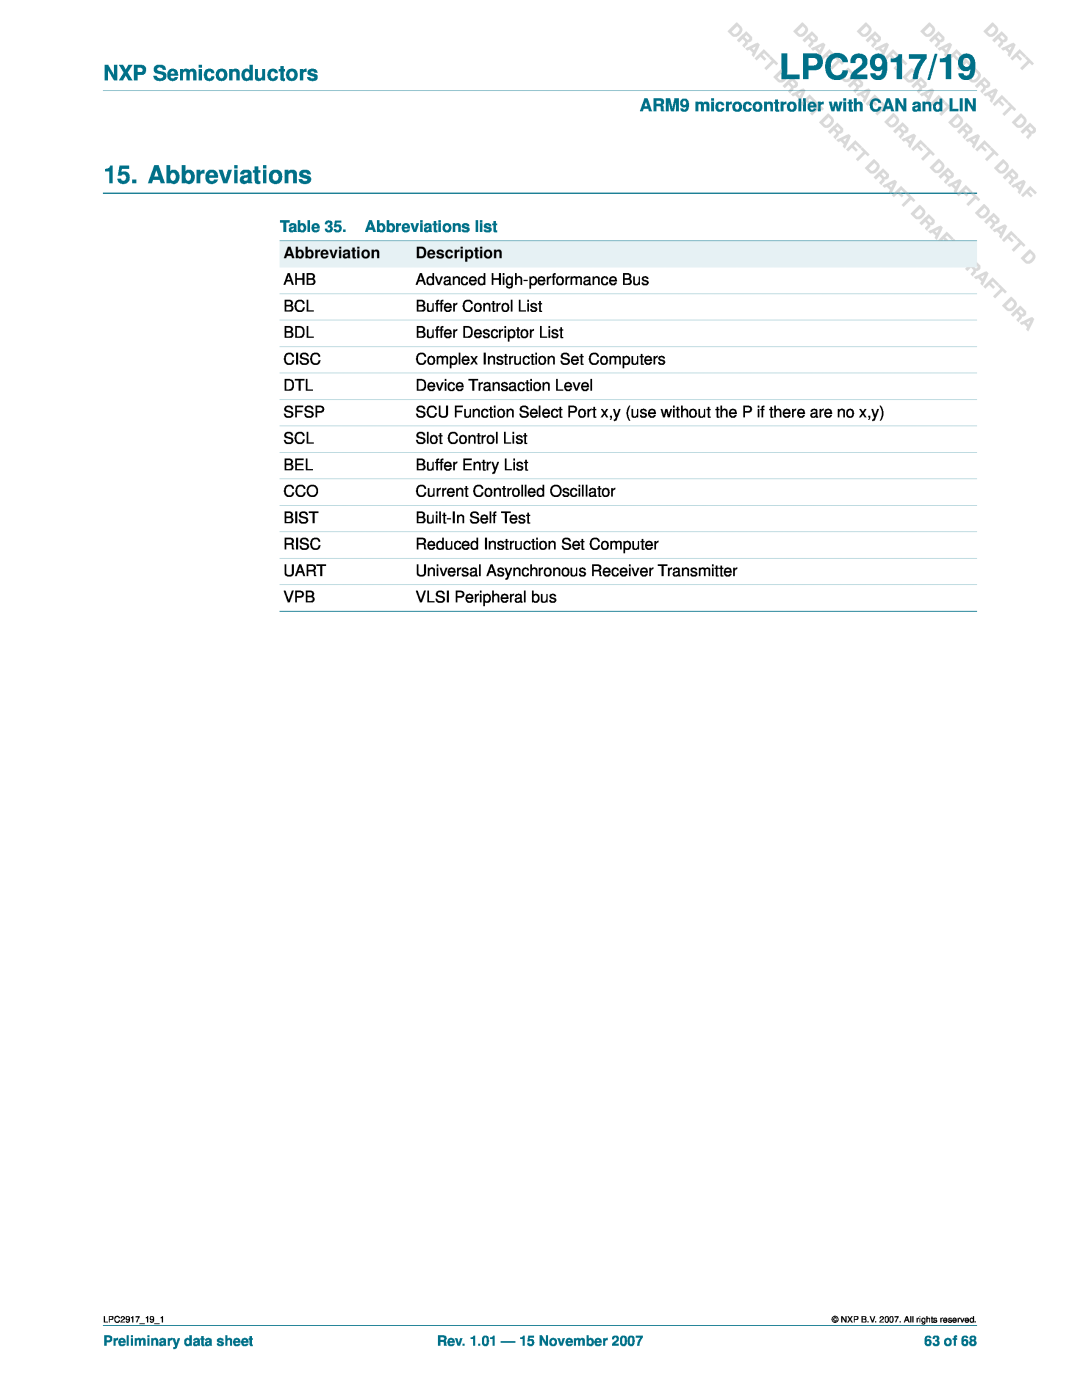 NXP Semiconductors Abbreviations, DLPC2917/19, Raft Aft, Dra Dr, T Draft, NXP Semiconductors, Draft Draft, Description 